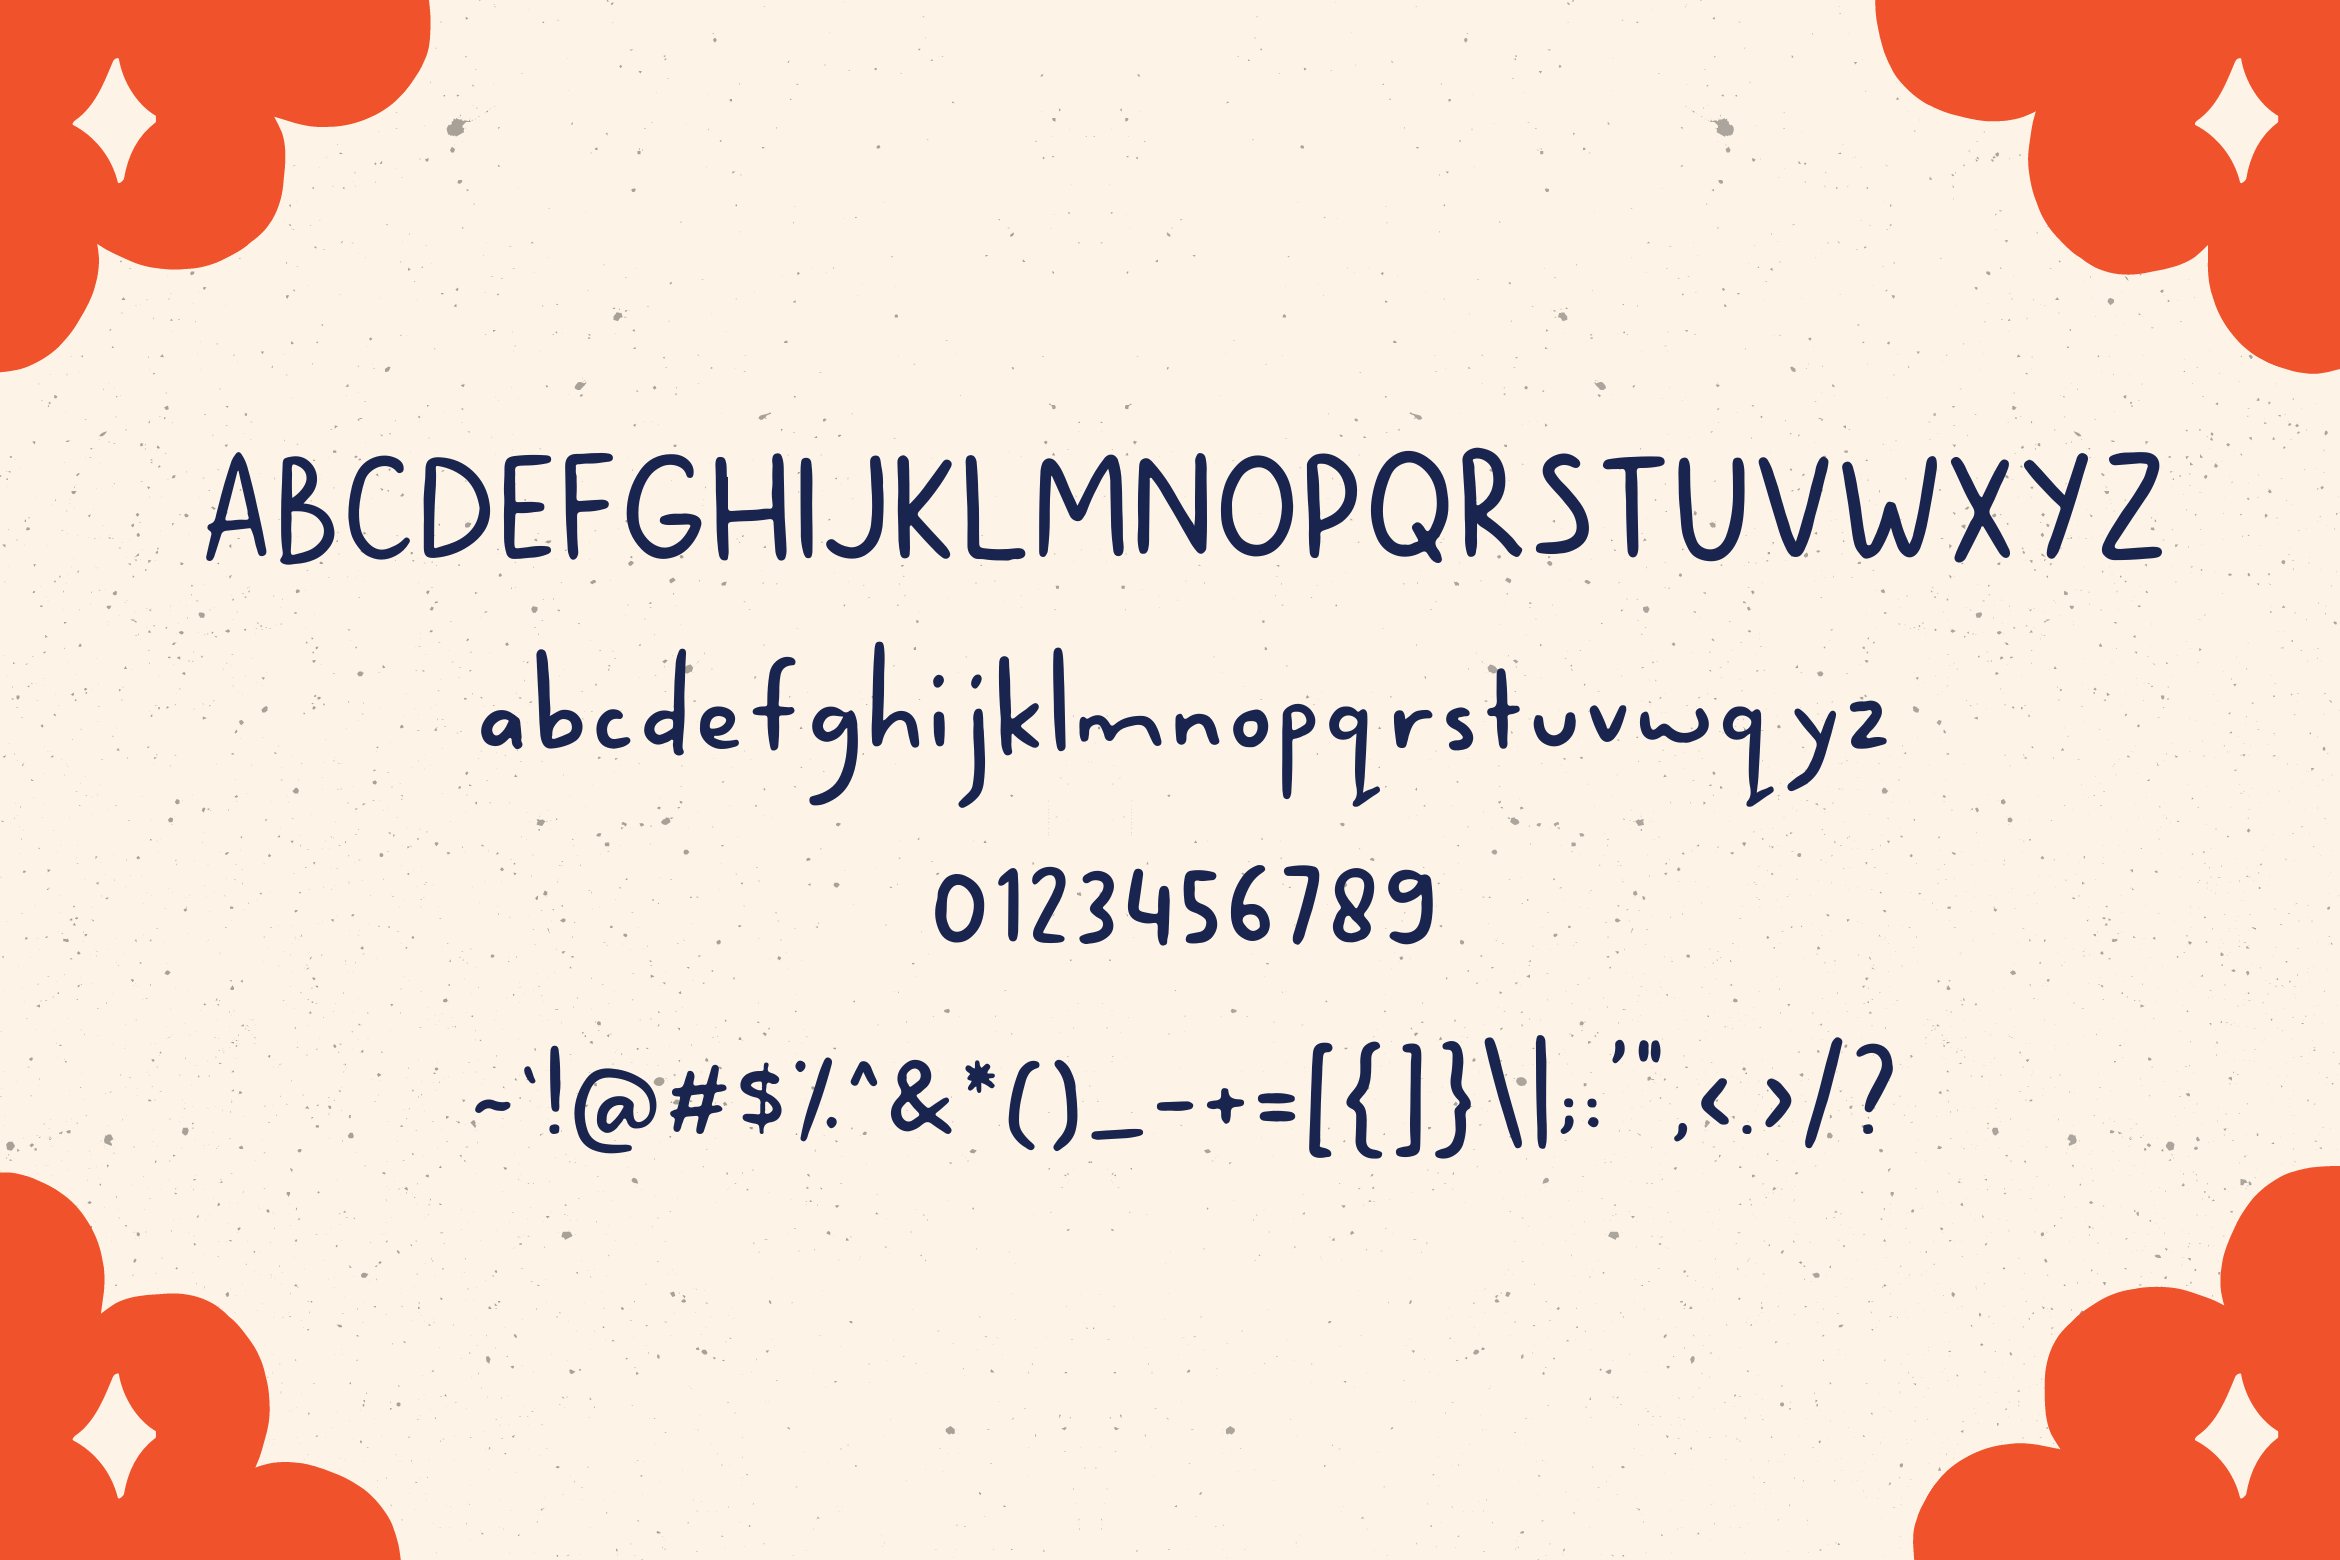 General view of Phitaya font.